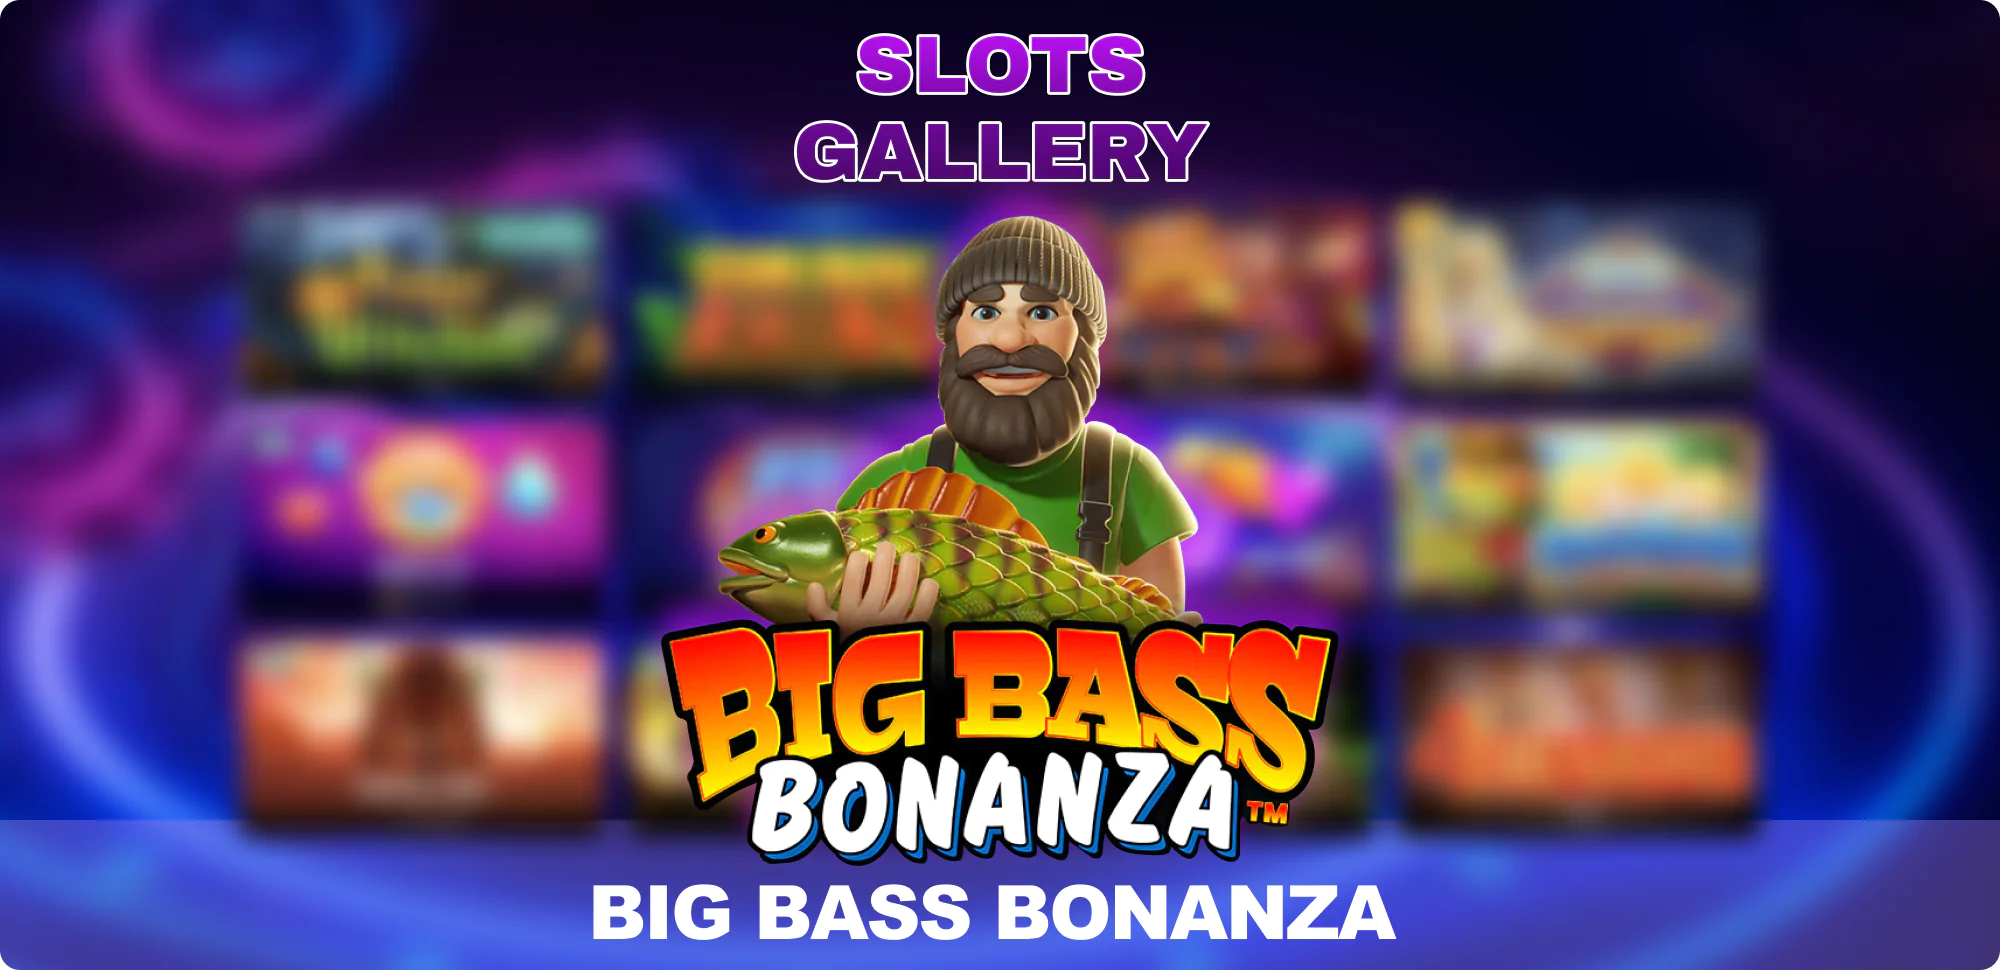 Slots Gallery Casino - Big Bass Bonanza slot